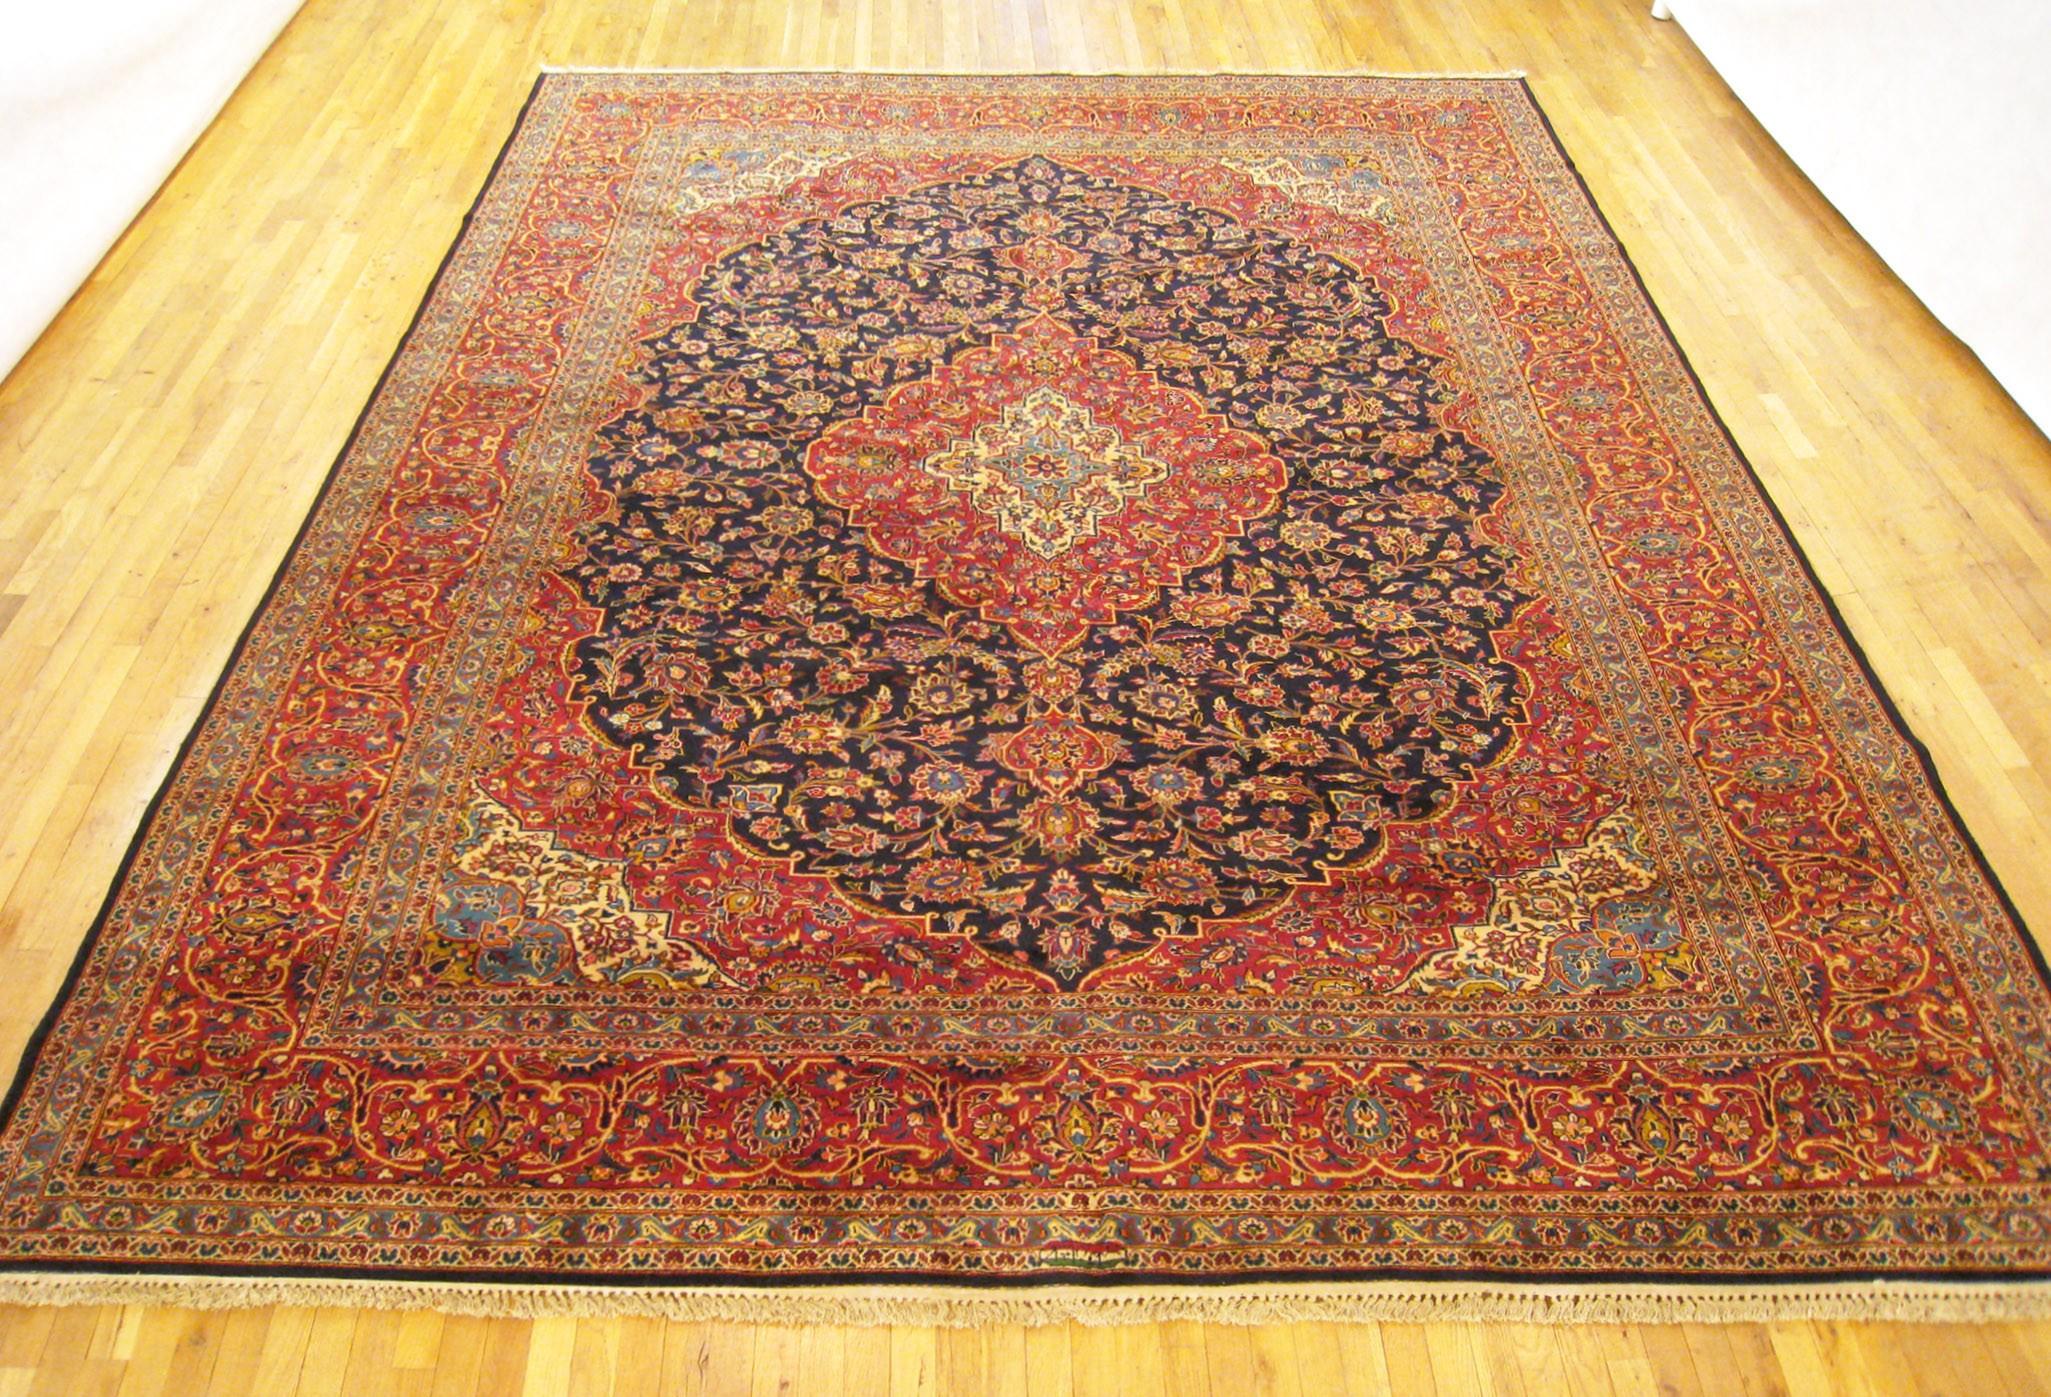 Vintage Persian Kashan Oriental carpet, in Room Size

An extraordinary vintage Persian Kashan carpet, circa 1950, size 13.9